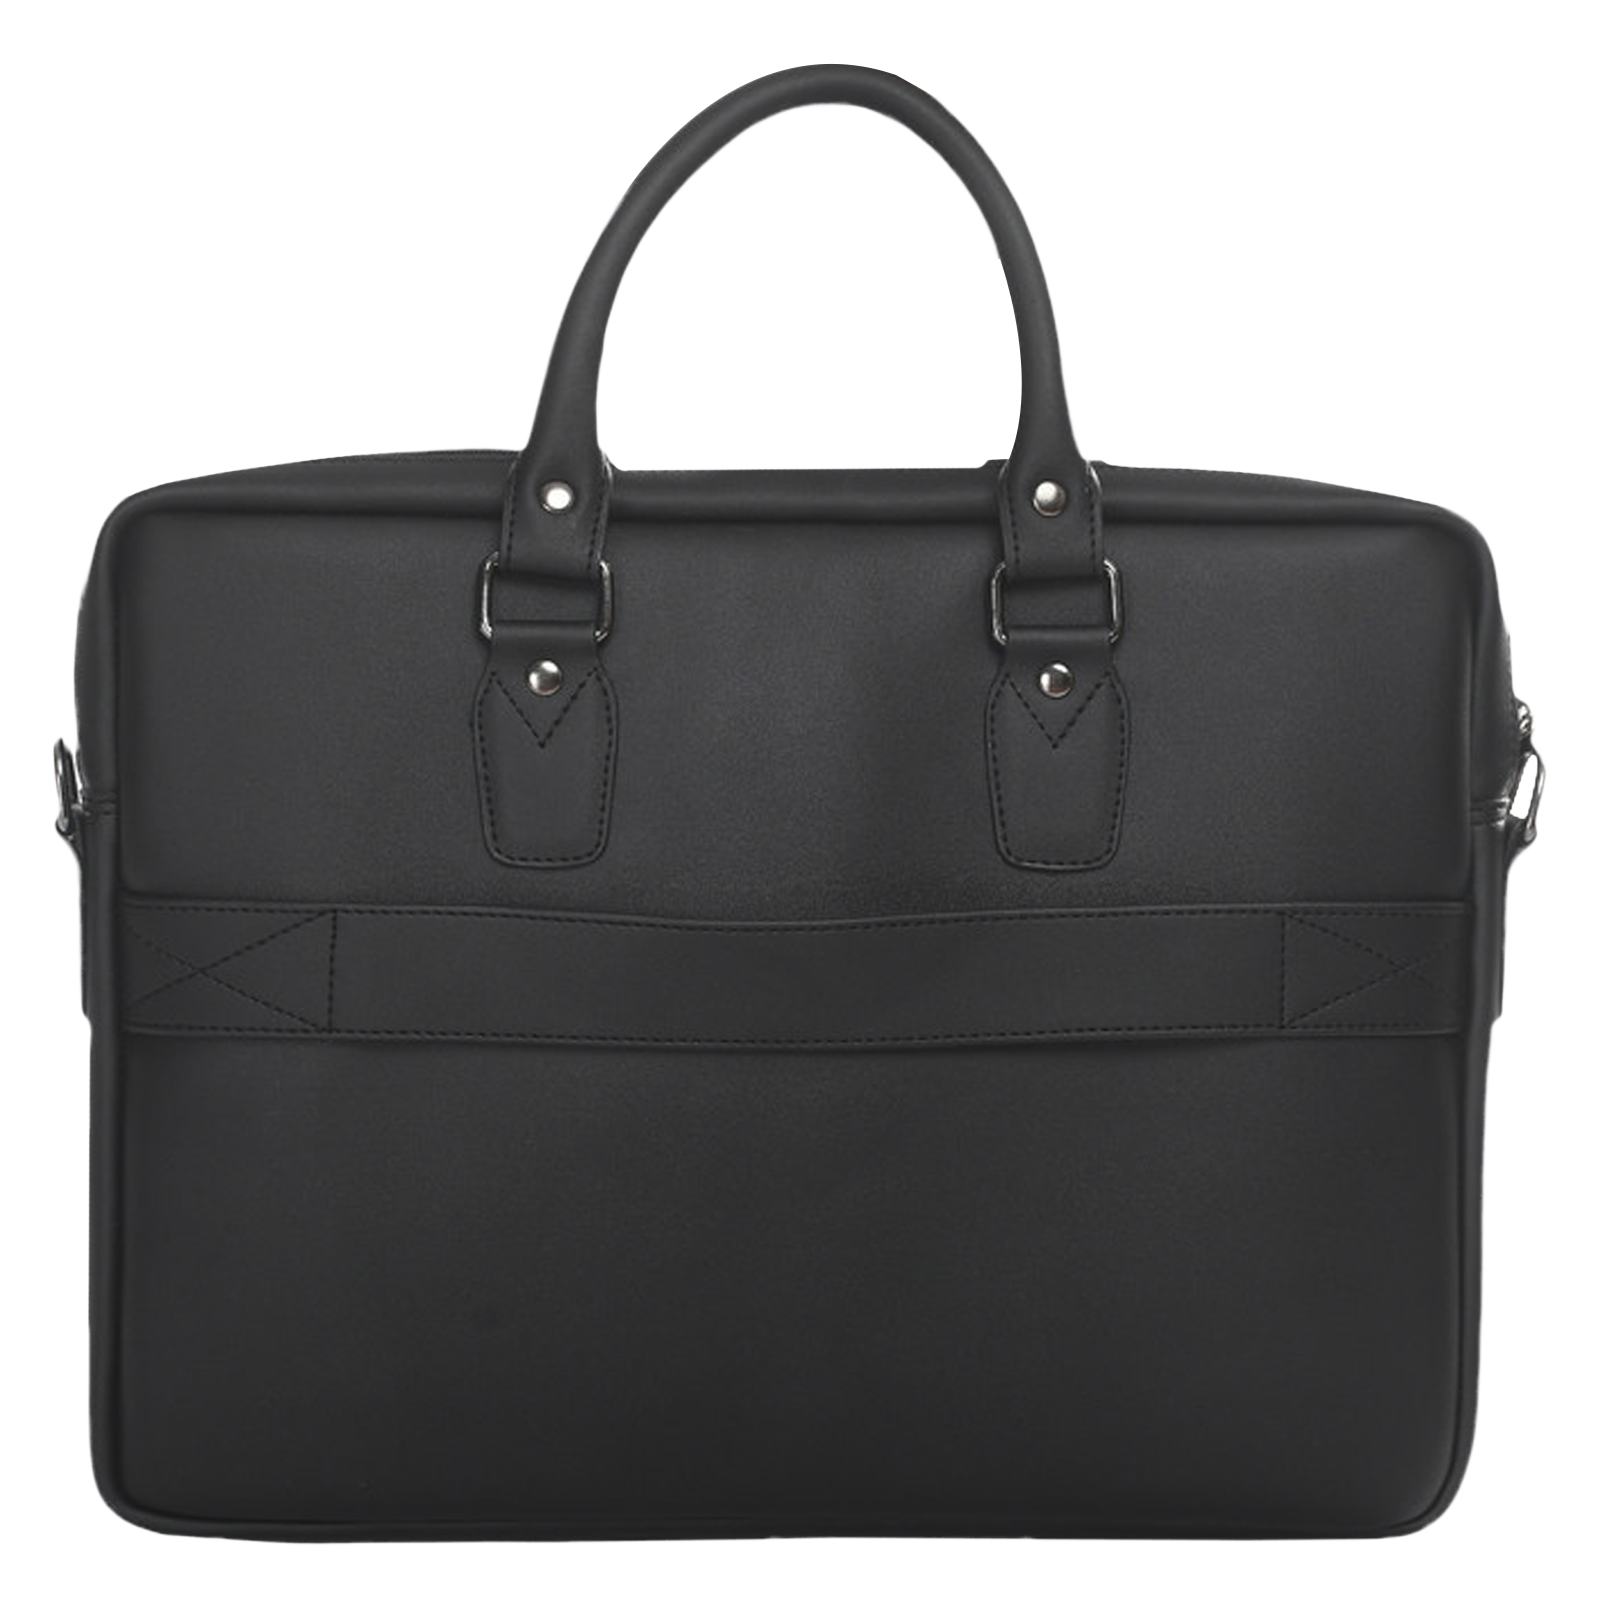 Backpacks | Croma Neopack Laptop Sleeve With Handle | Freeup